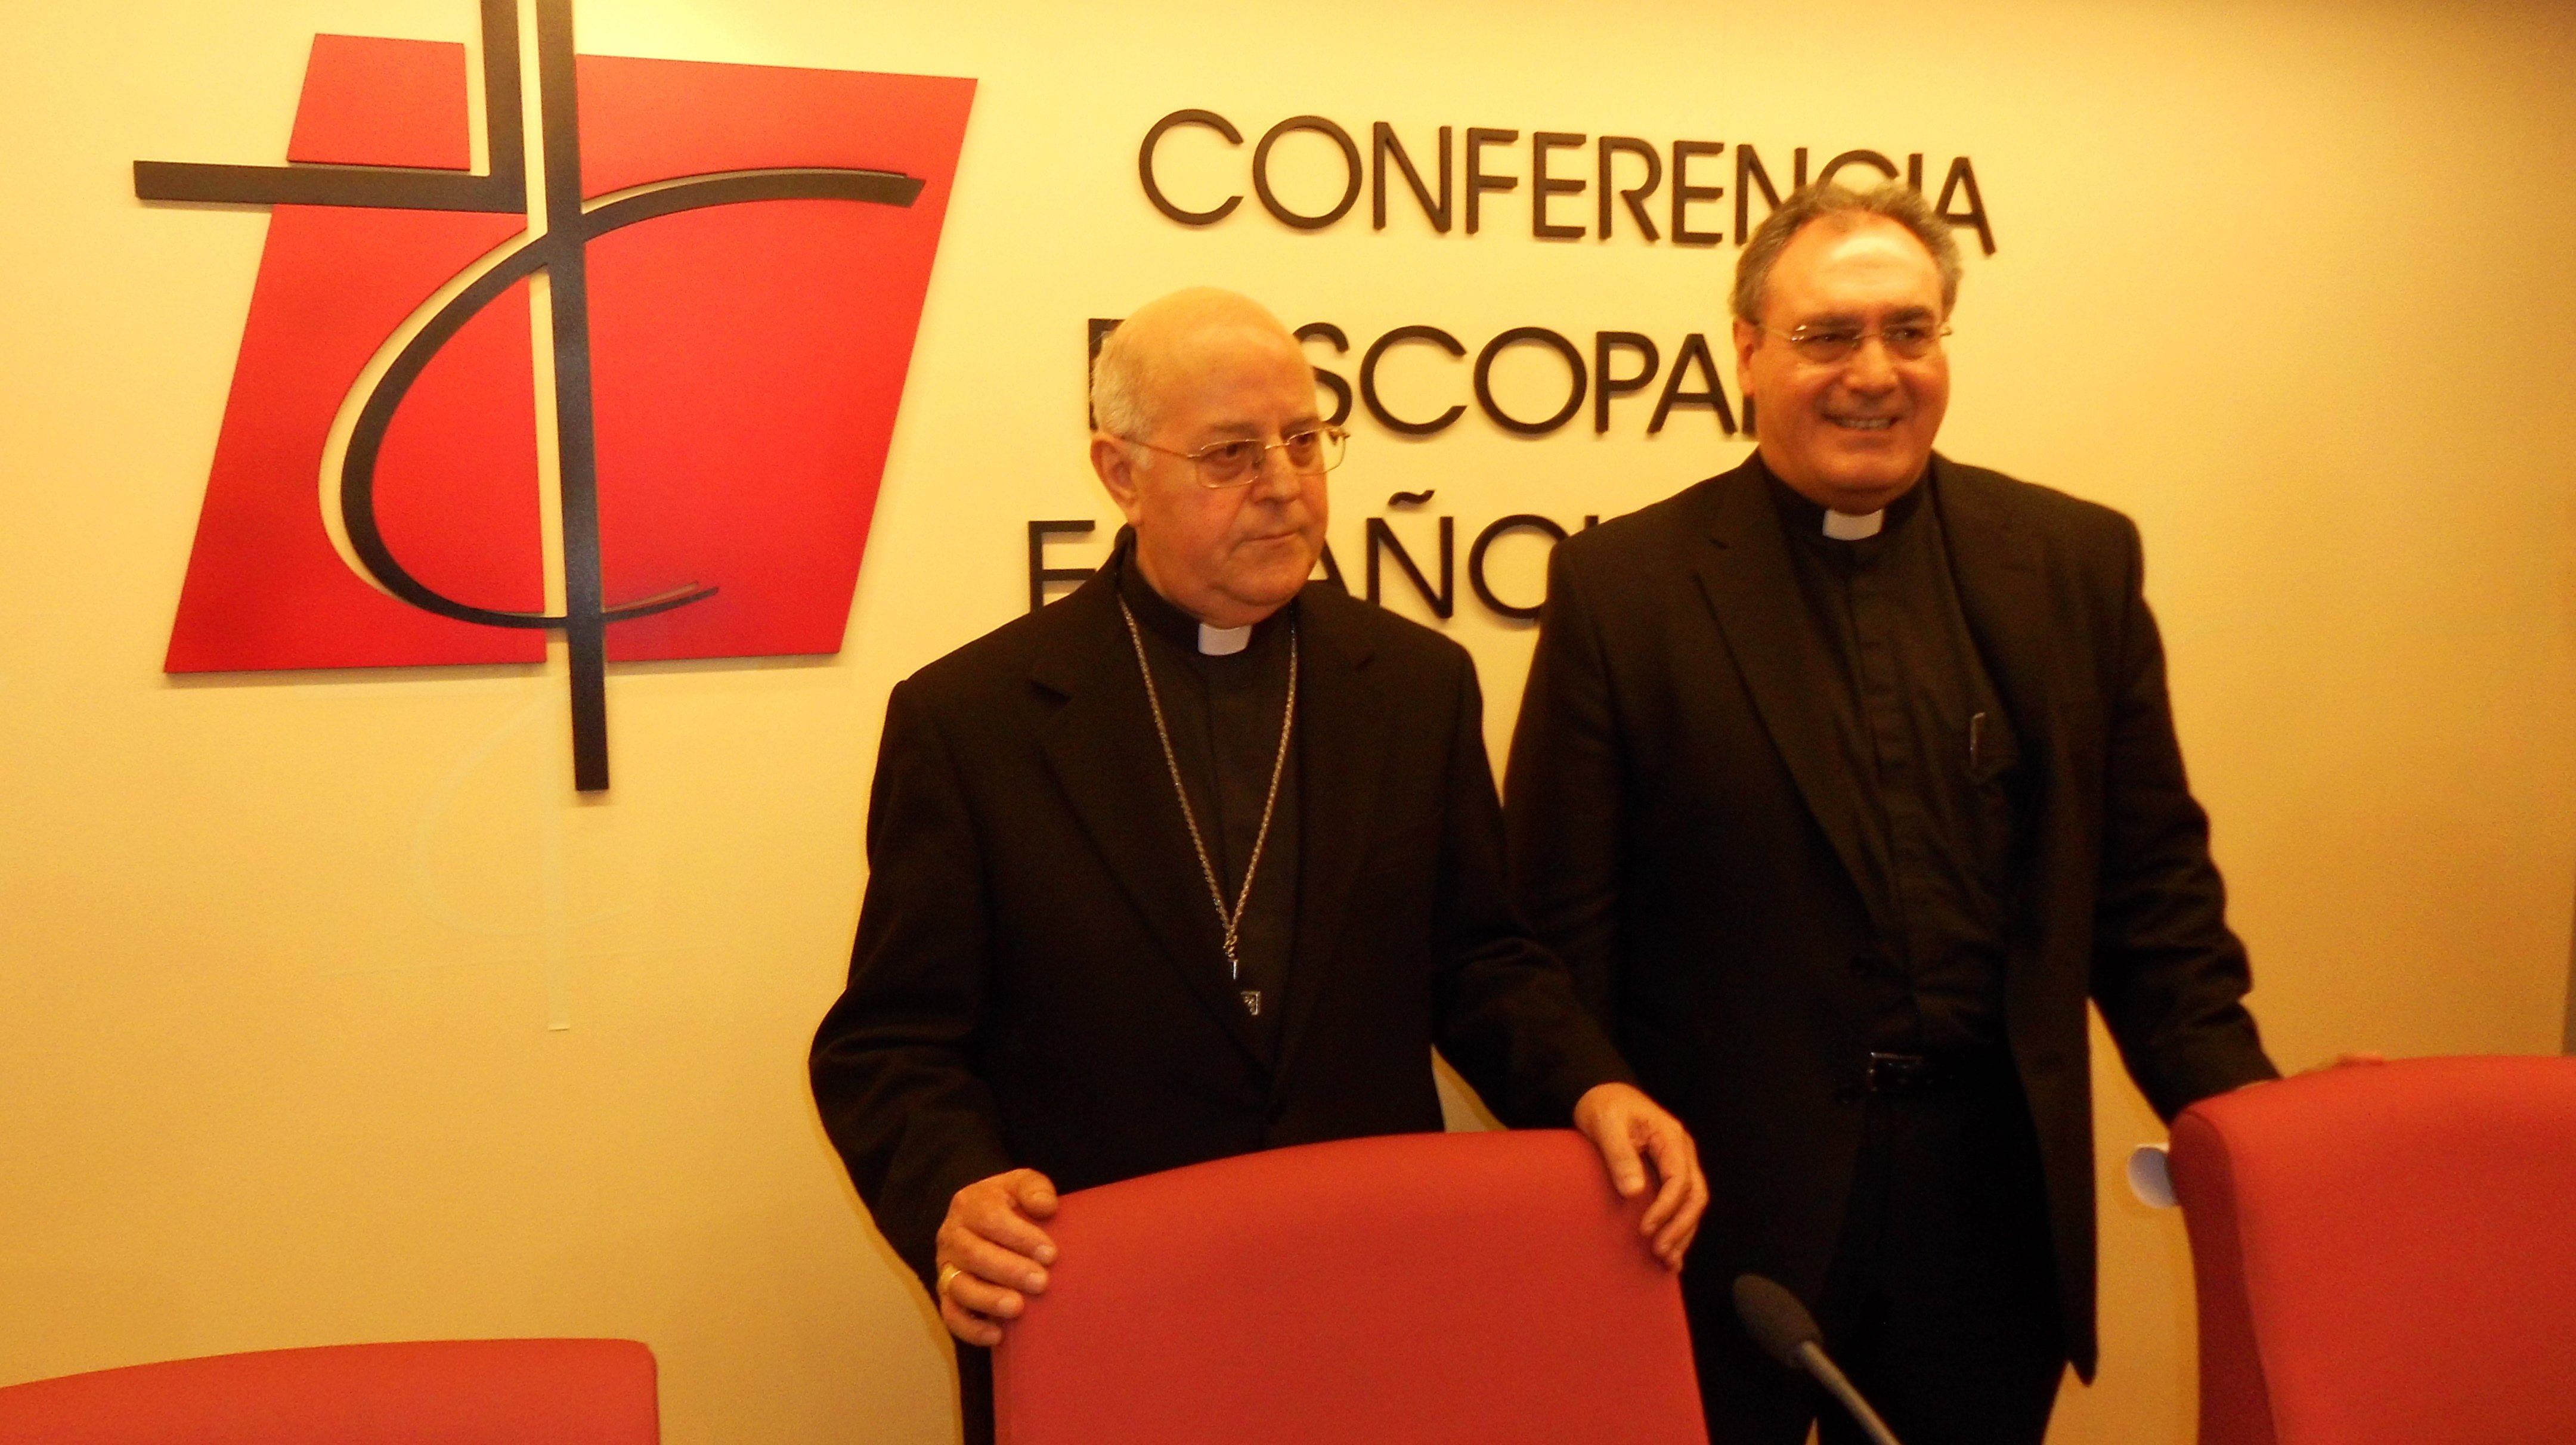 200 cristianos de Tarragona replican a la Conferencia Episcopal sobre el 155